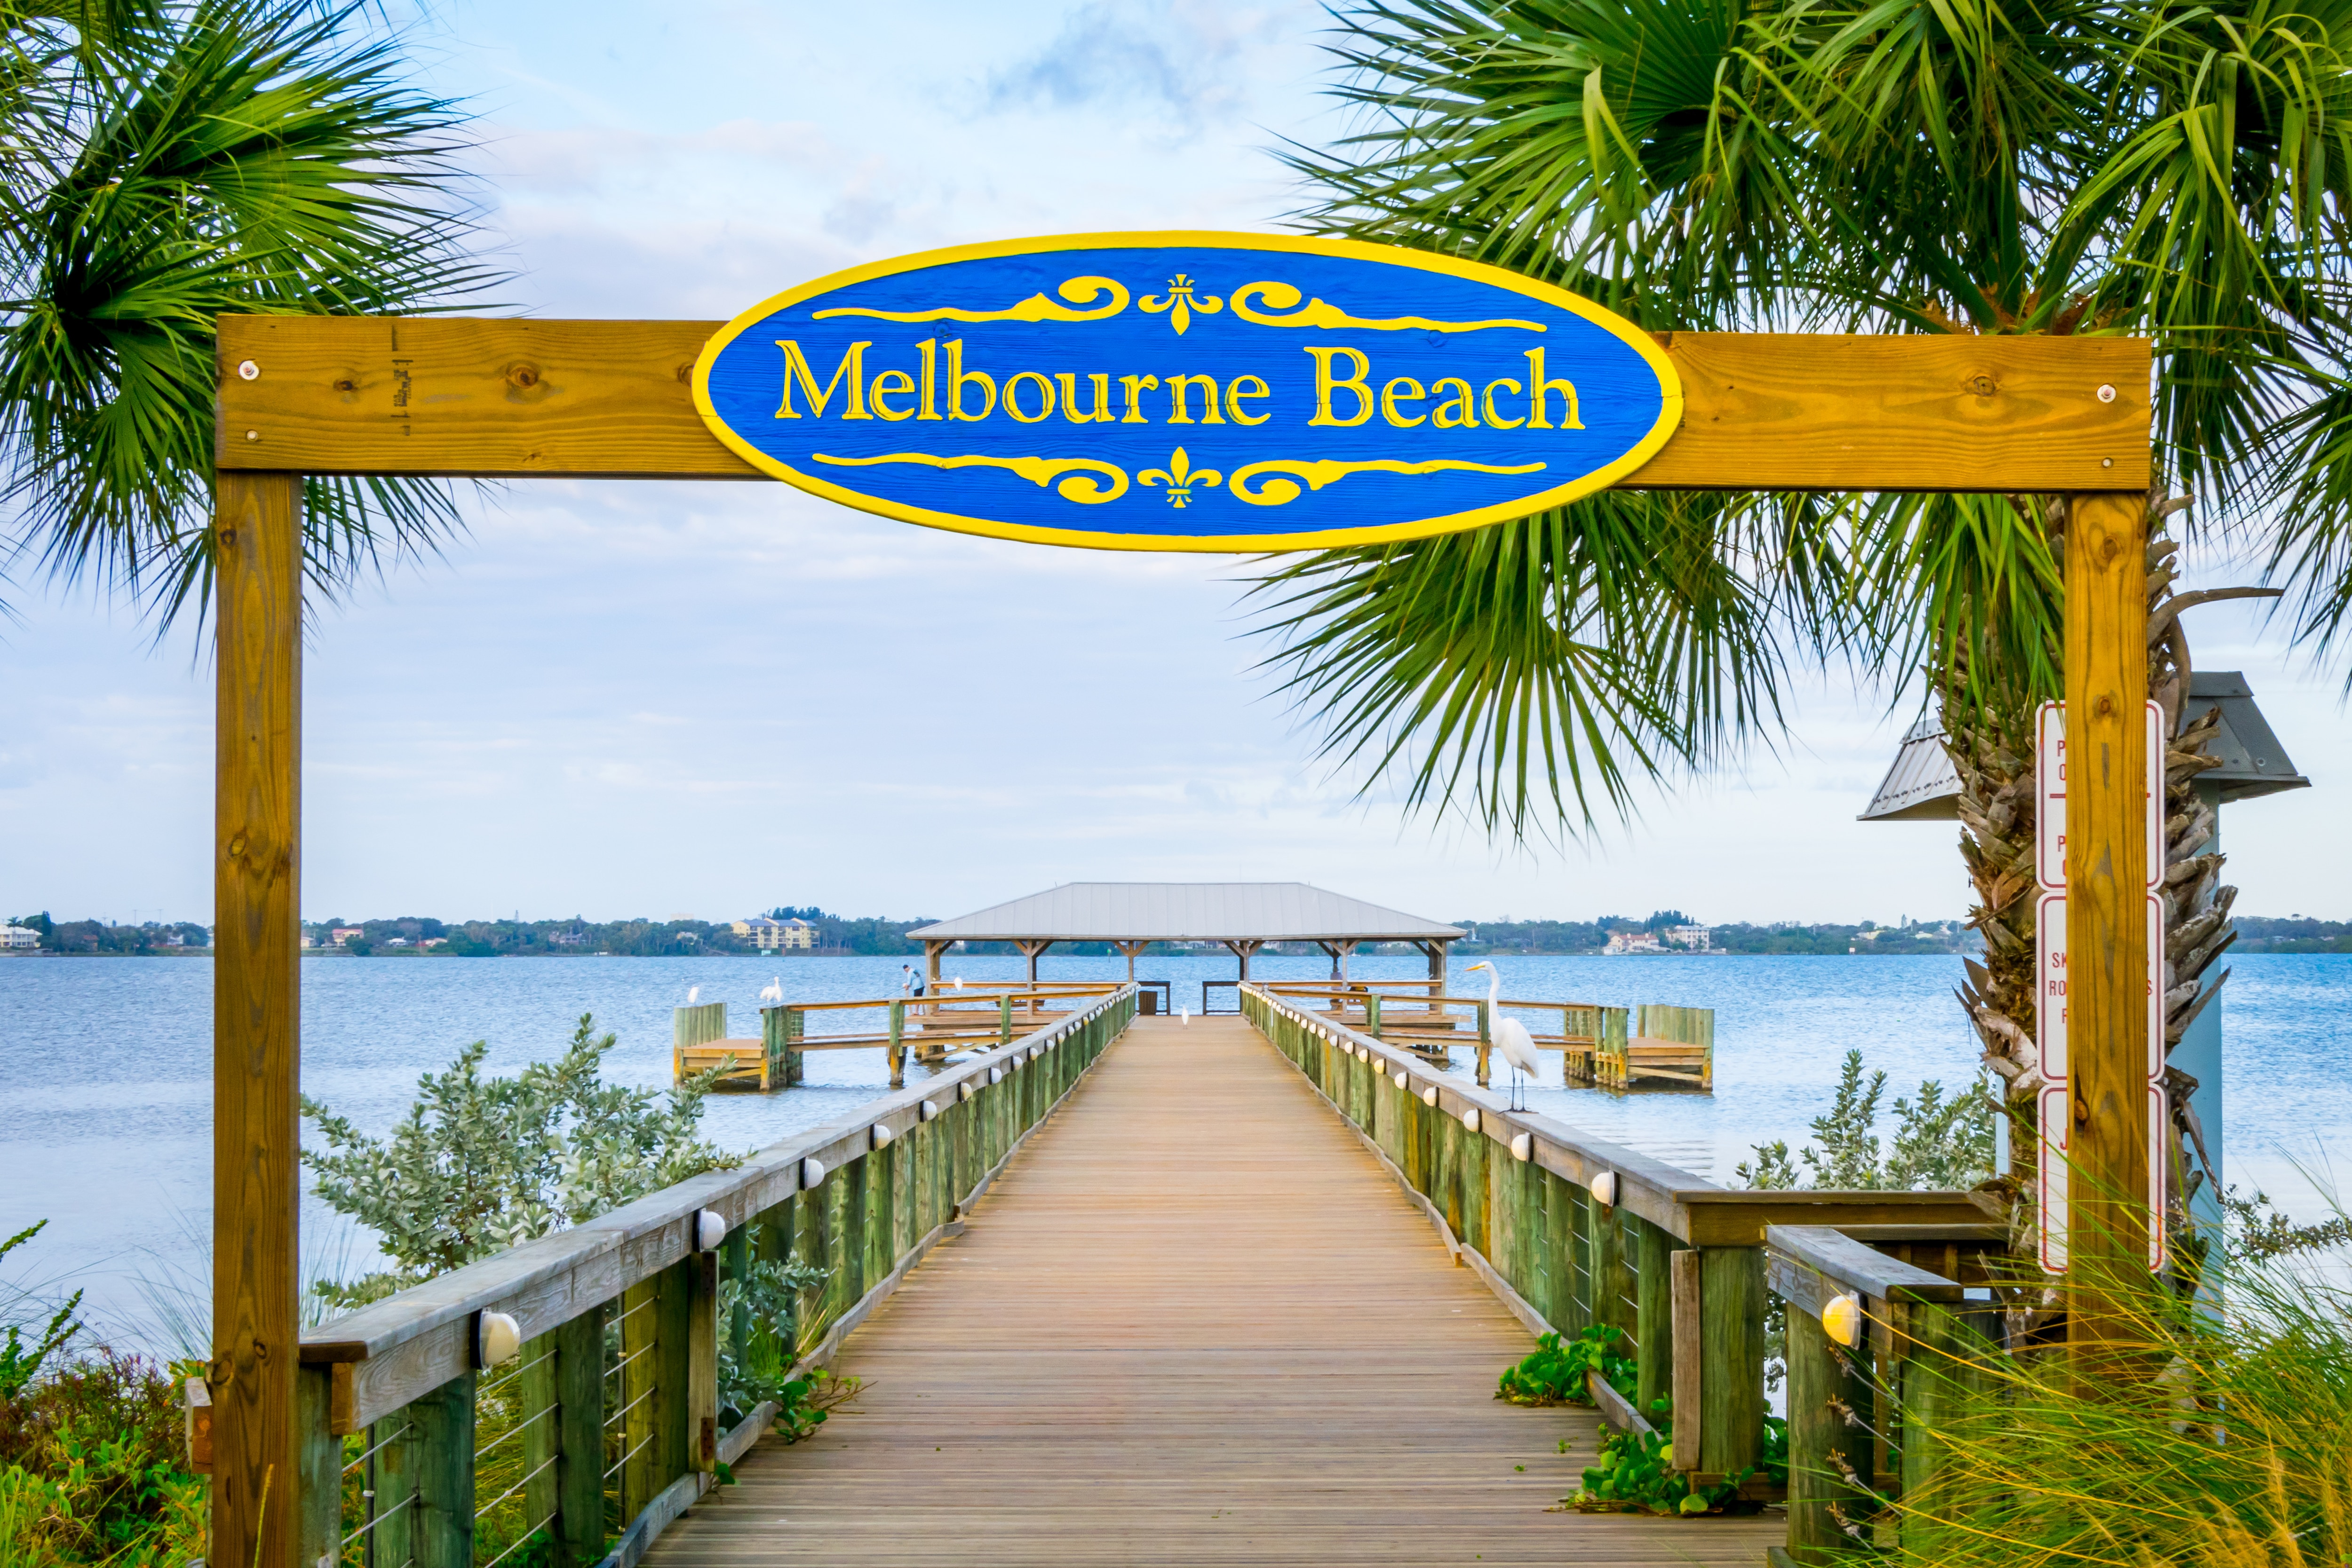 Melbourne Beach sign and pier in Melbourne Beach, Florida.